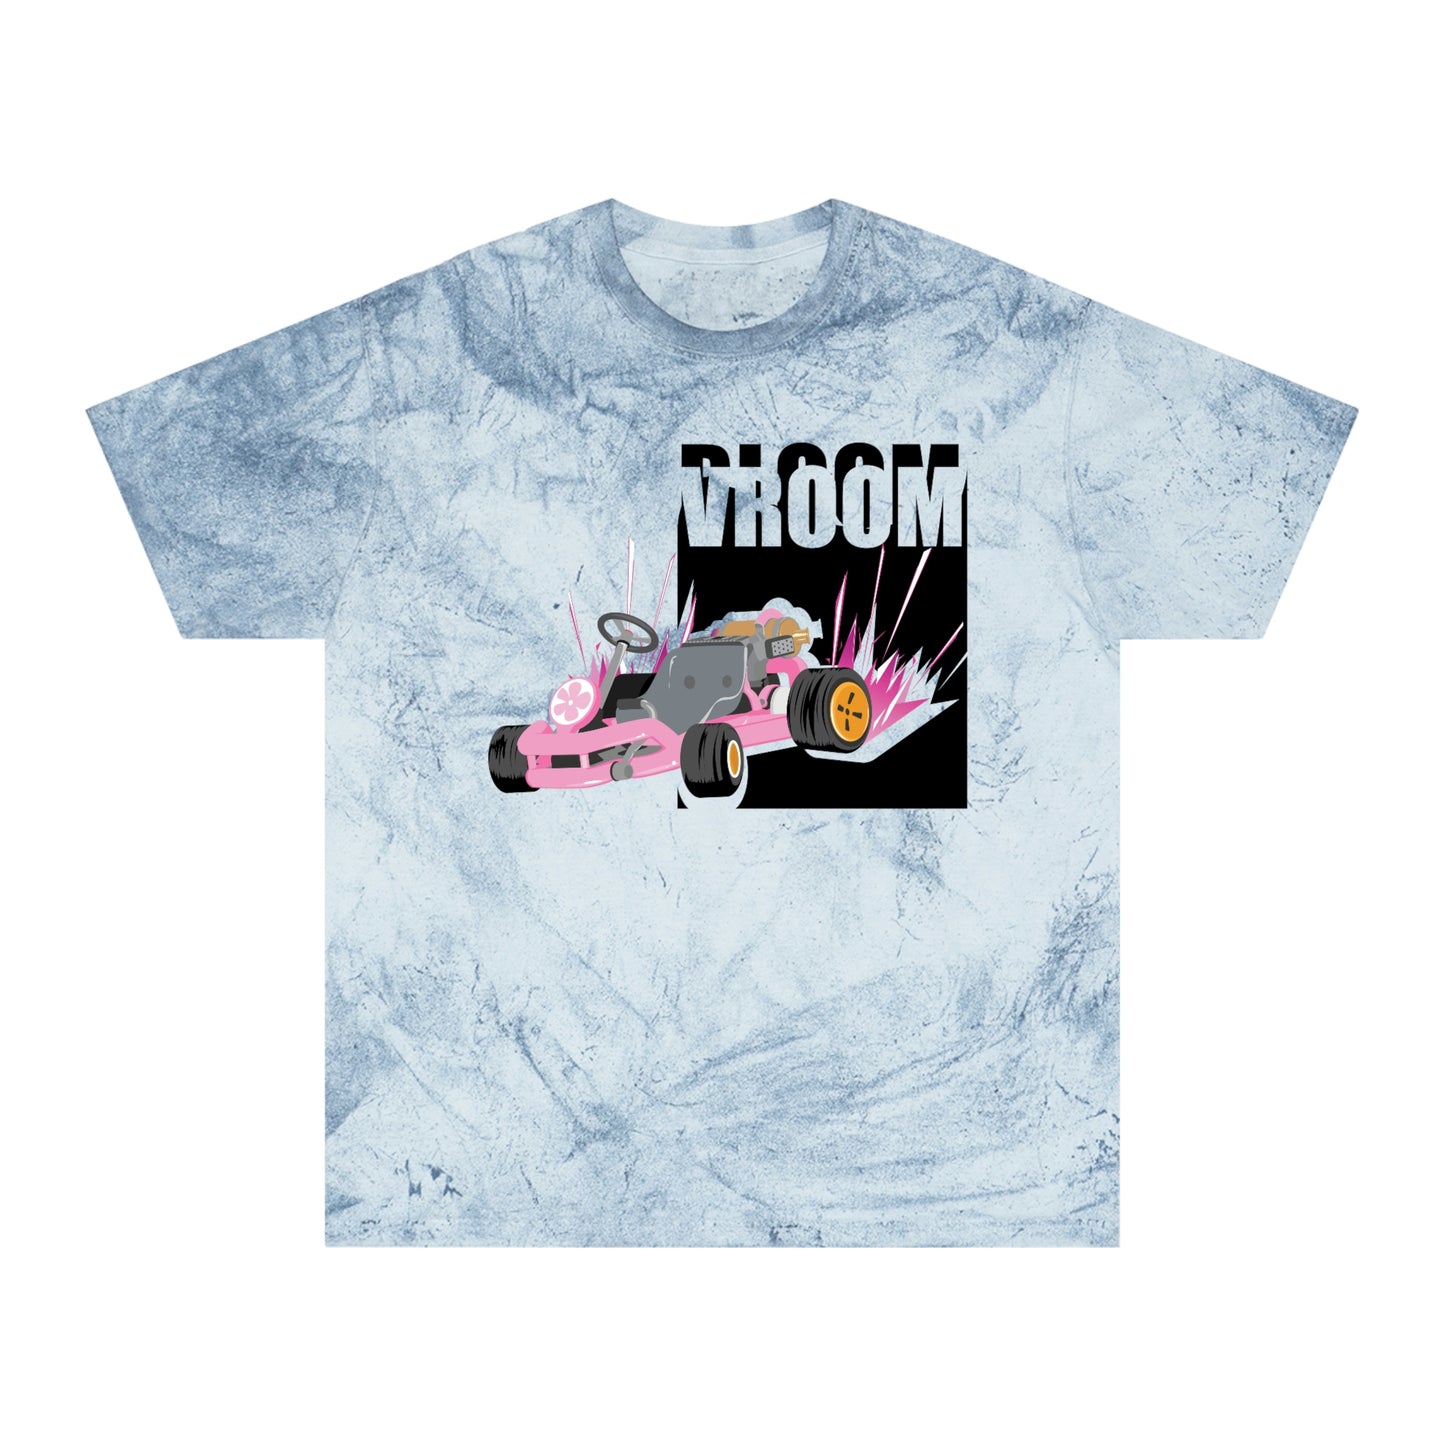 Vroom Bloom Tye dye T-Shirt